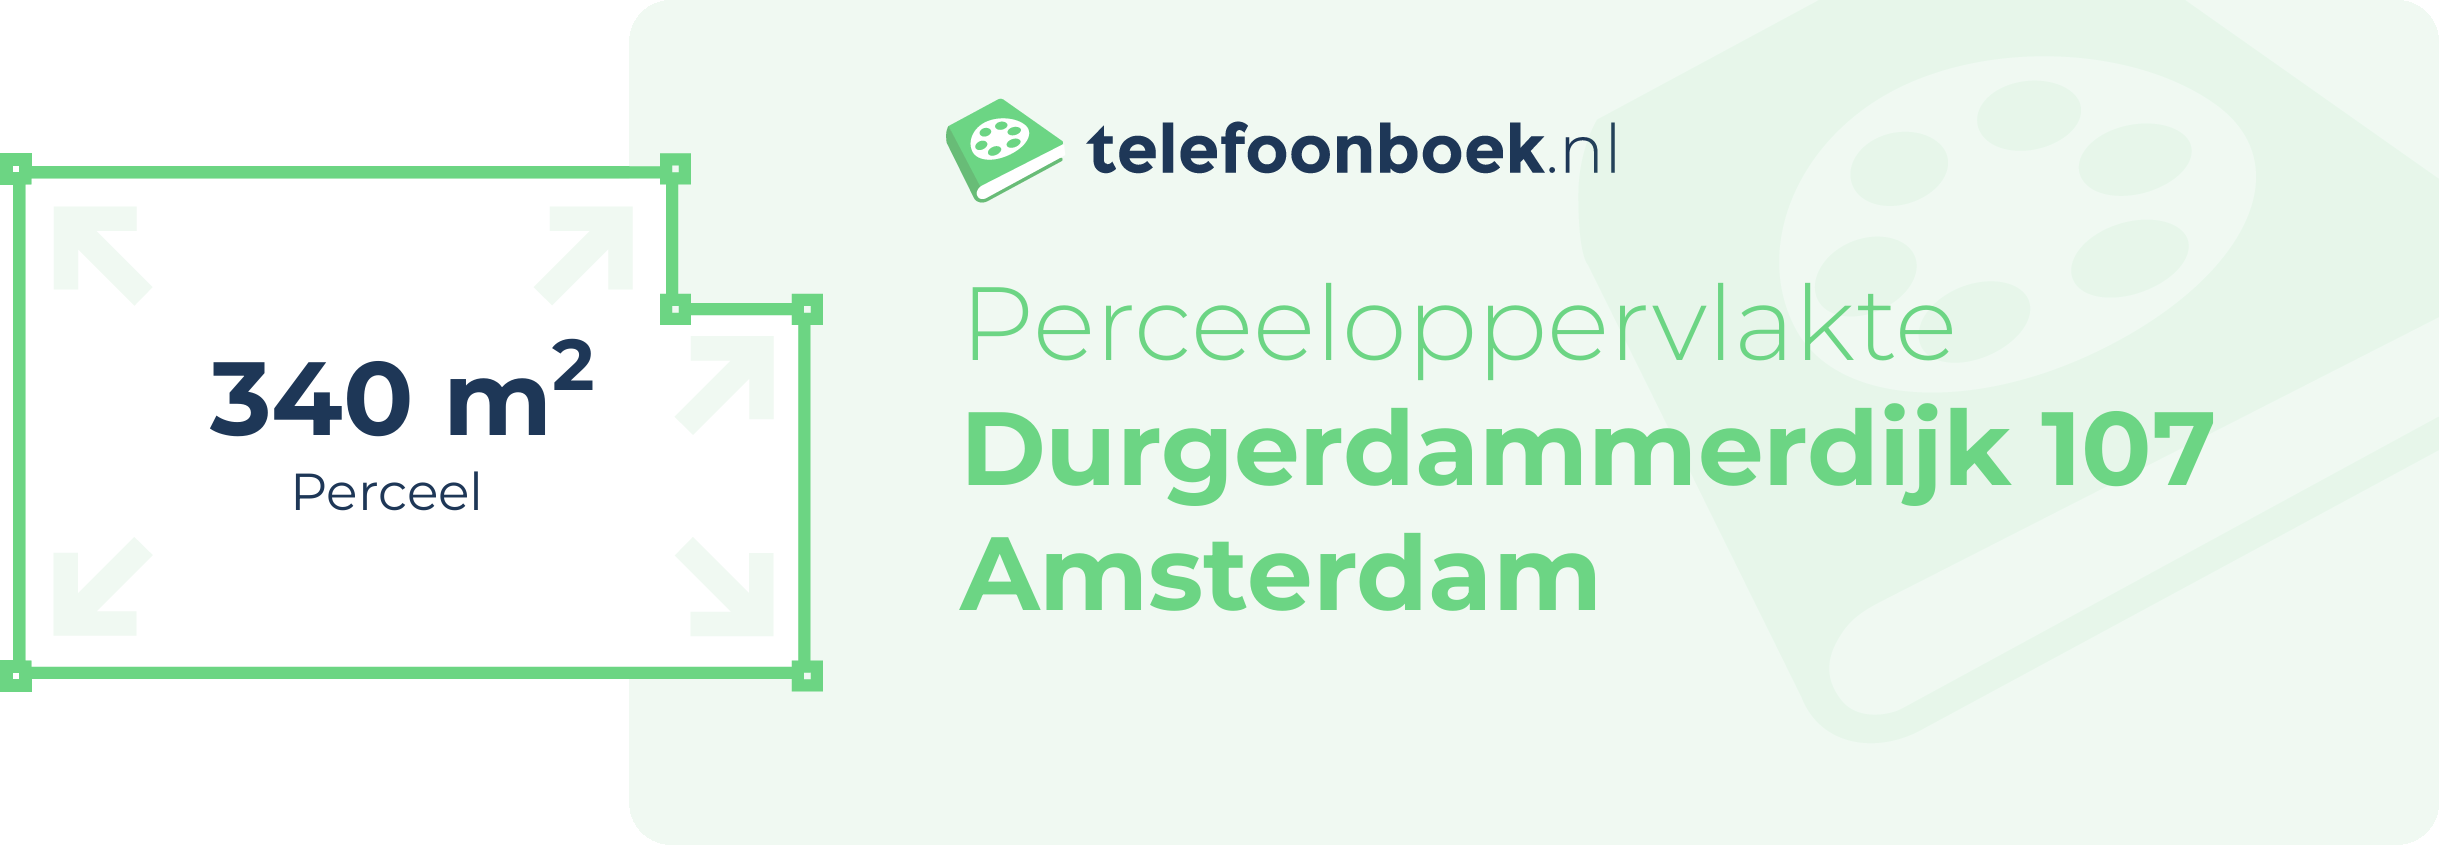 Perceeloppervlakte Durgerdammerdijk 107 Amsterdam